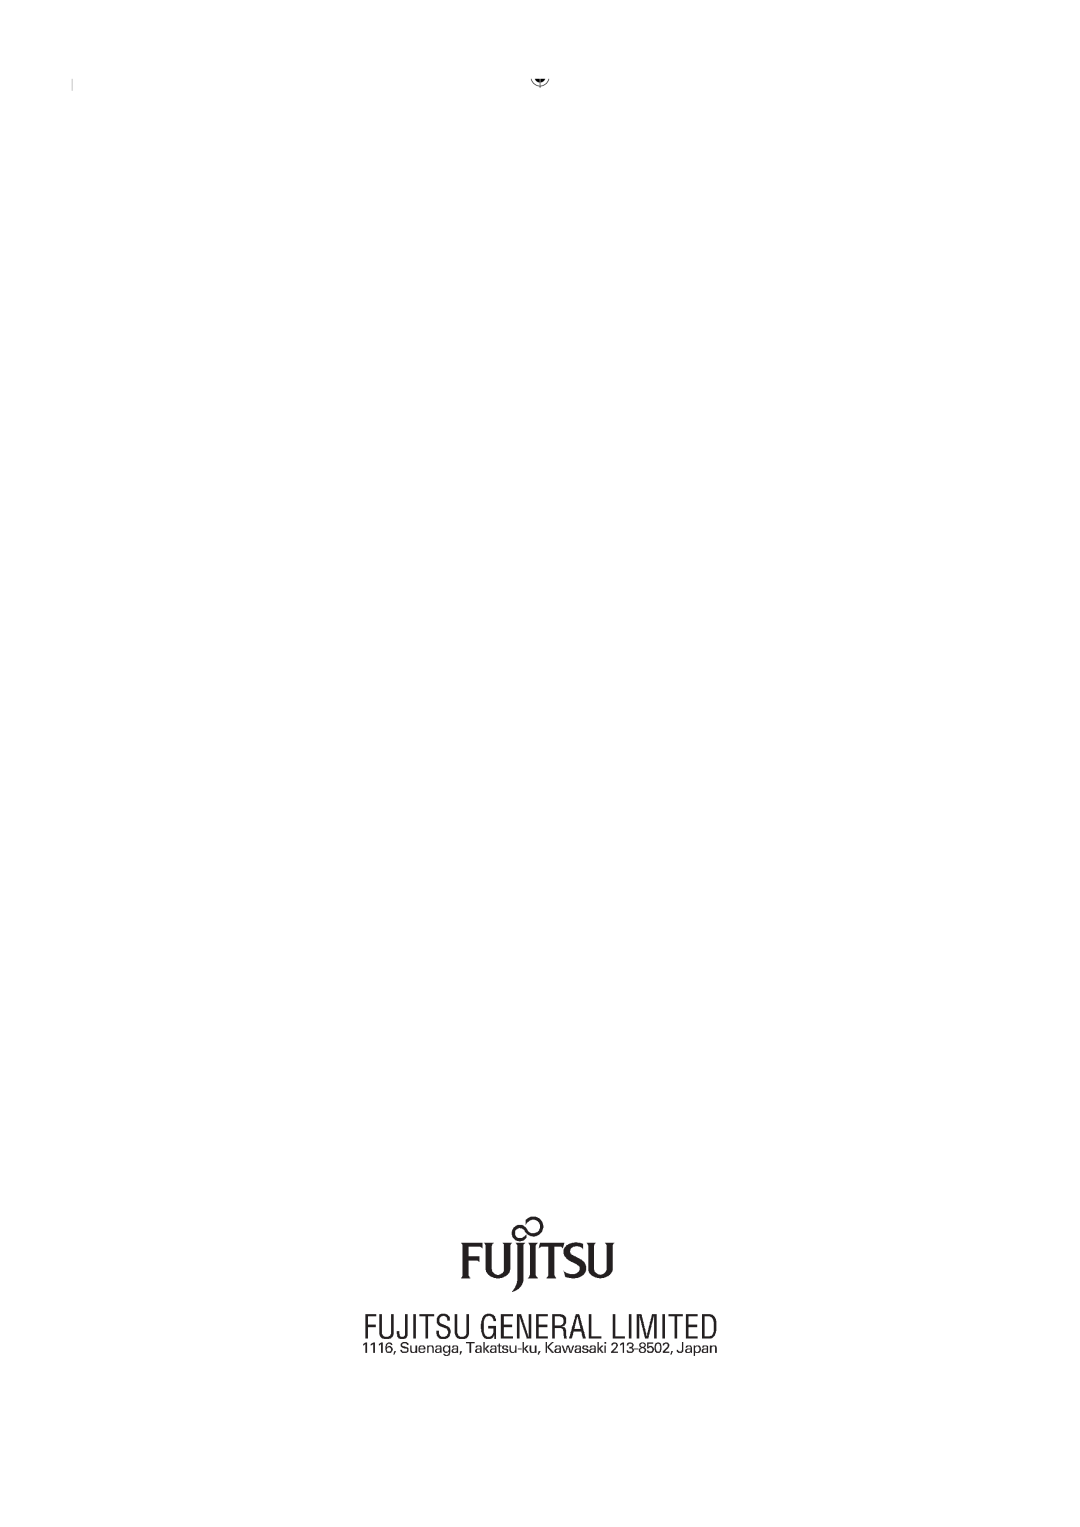 Fujitsu 9332280012-02, Air Konditioner Compact Wall Mounted Type manual 